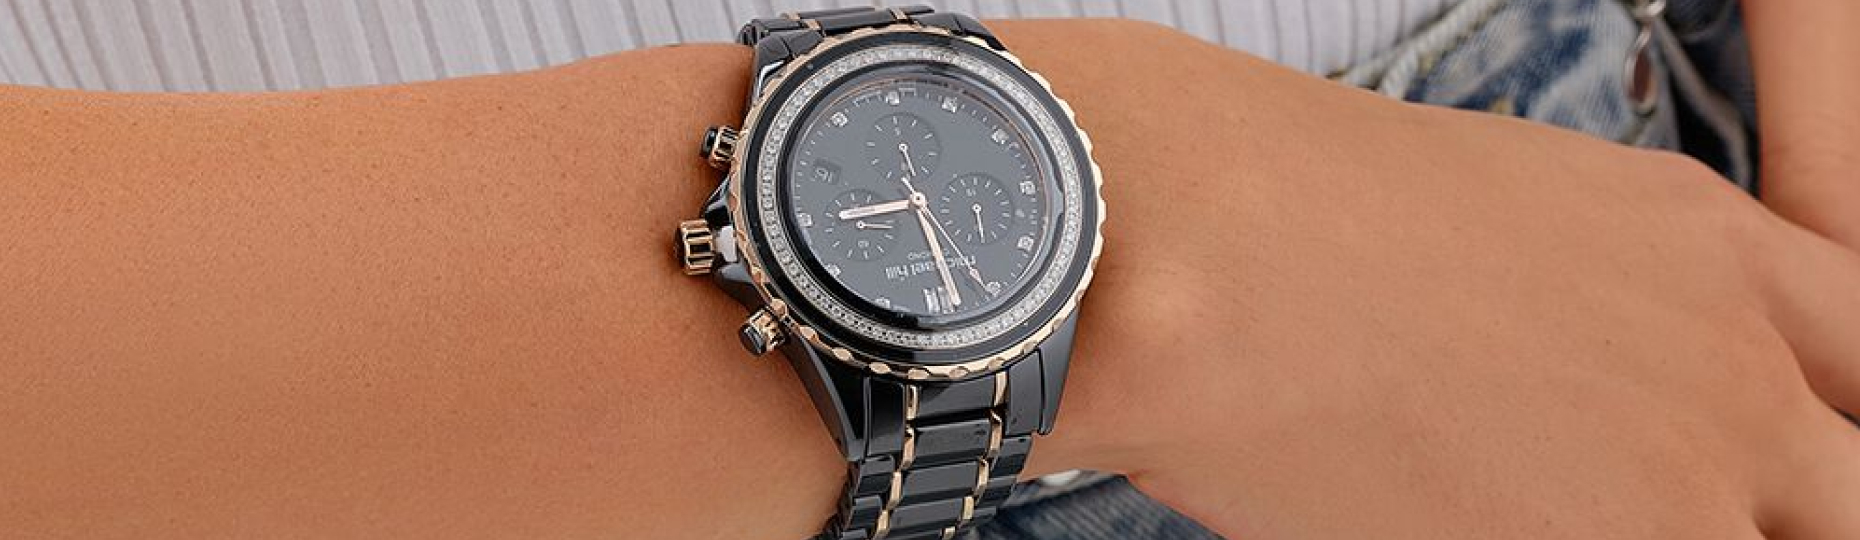 Woman wearing black ceramic watch